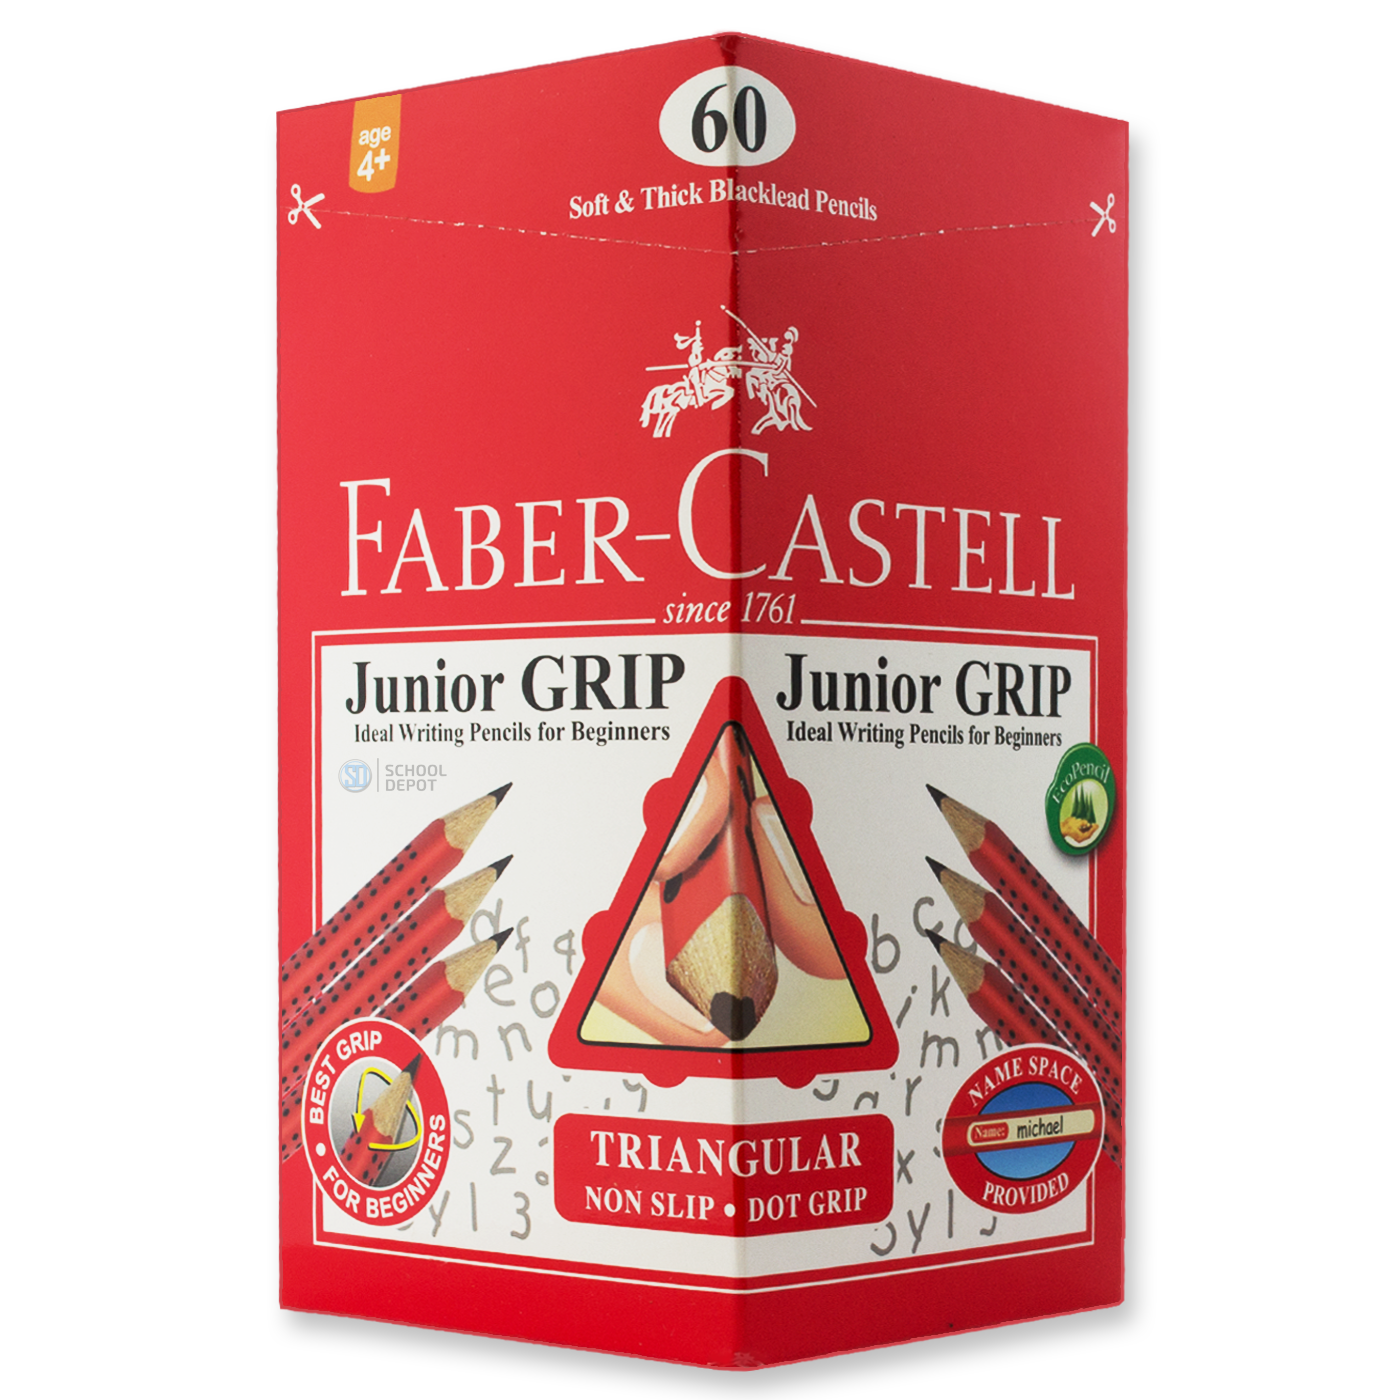 Faber-Castell Junior Grip Triangular Pencil HB Box of 60